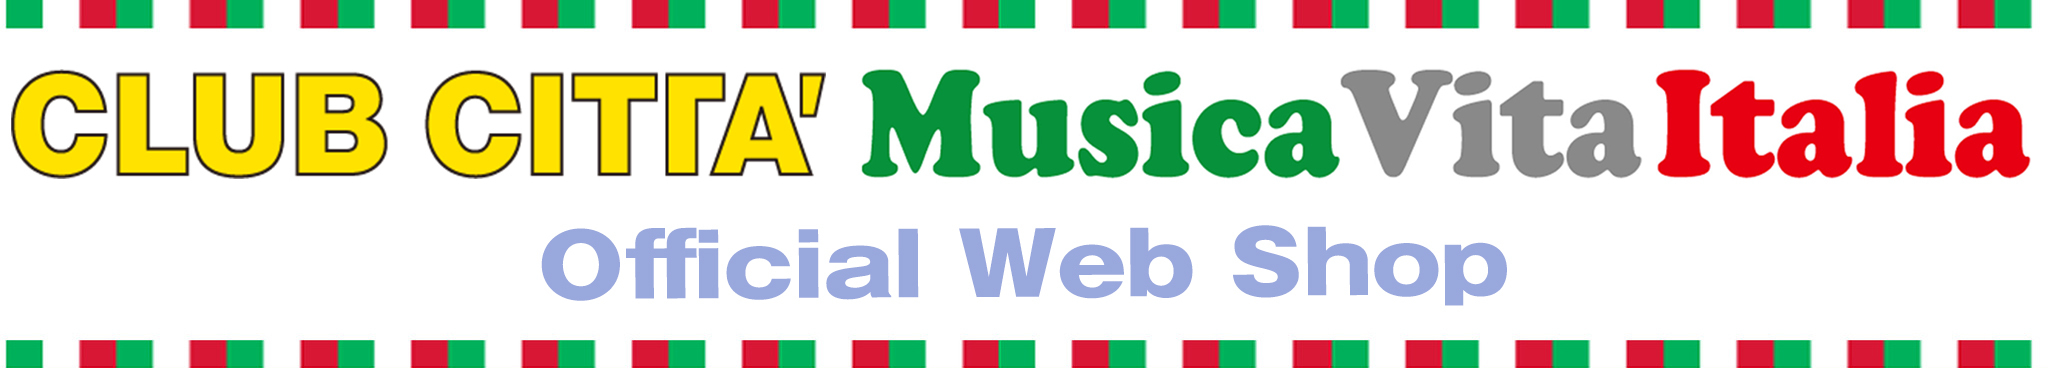 Clubcitta' Musica Vita Italia : Official Web Shop